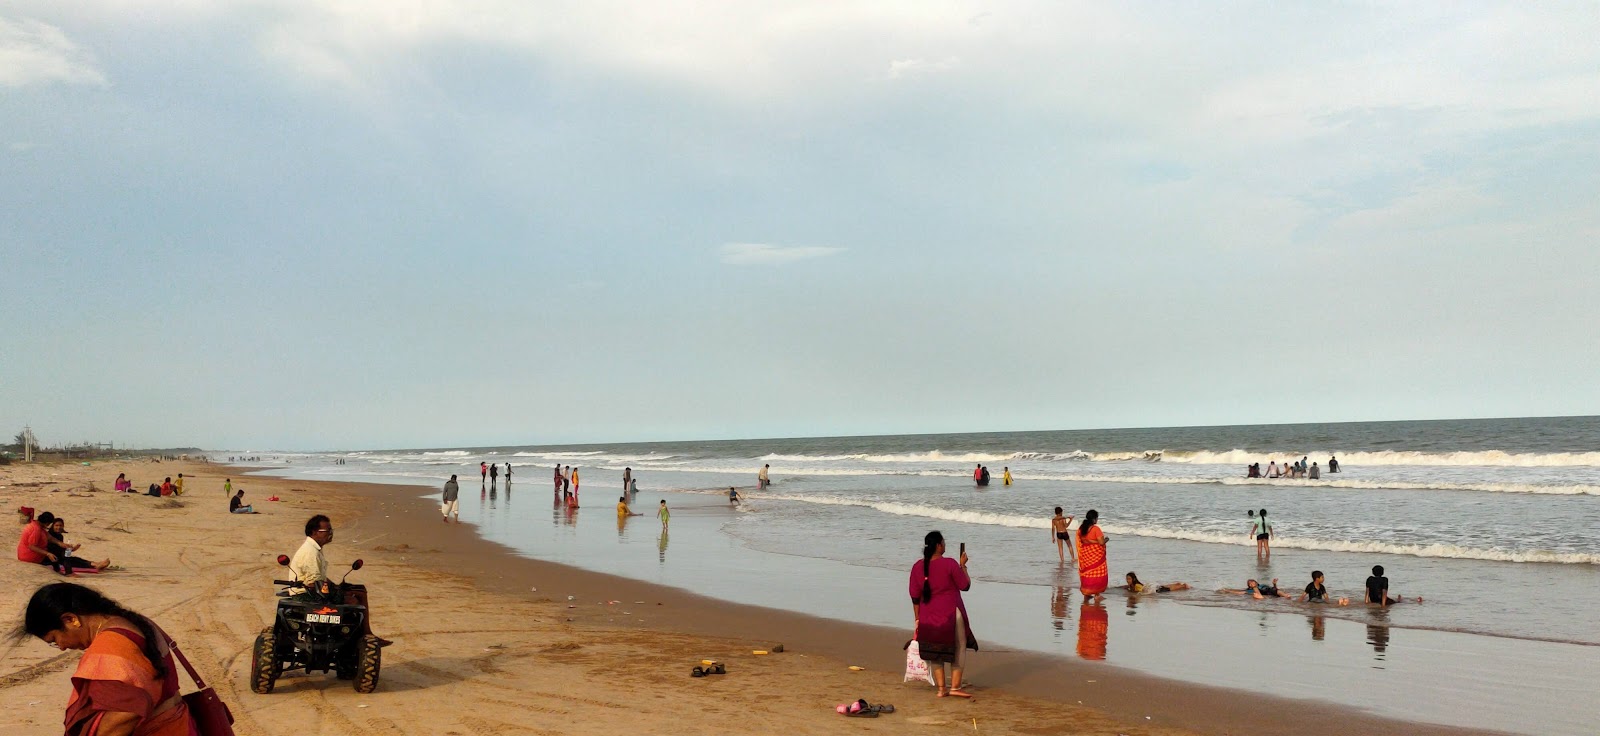 Foto van Ramapuram Shootout Beach met recht en lang